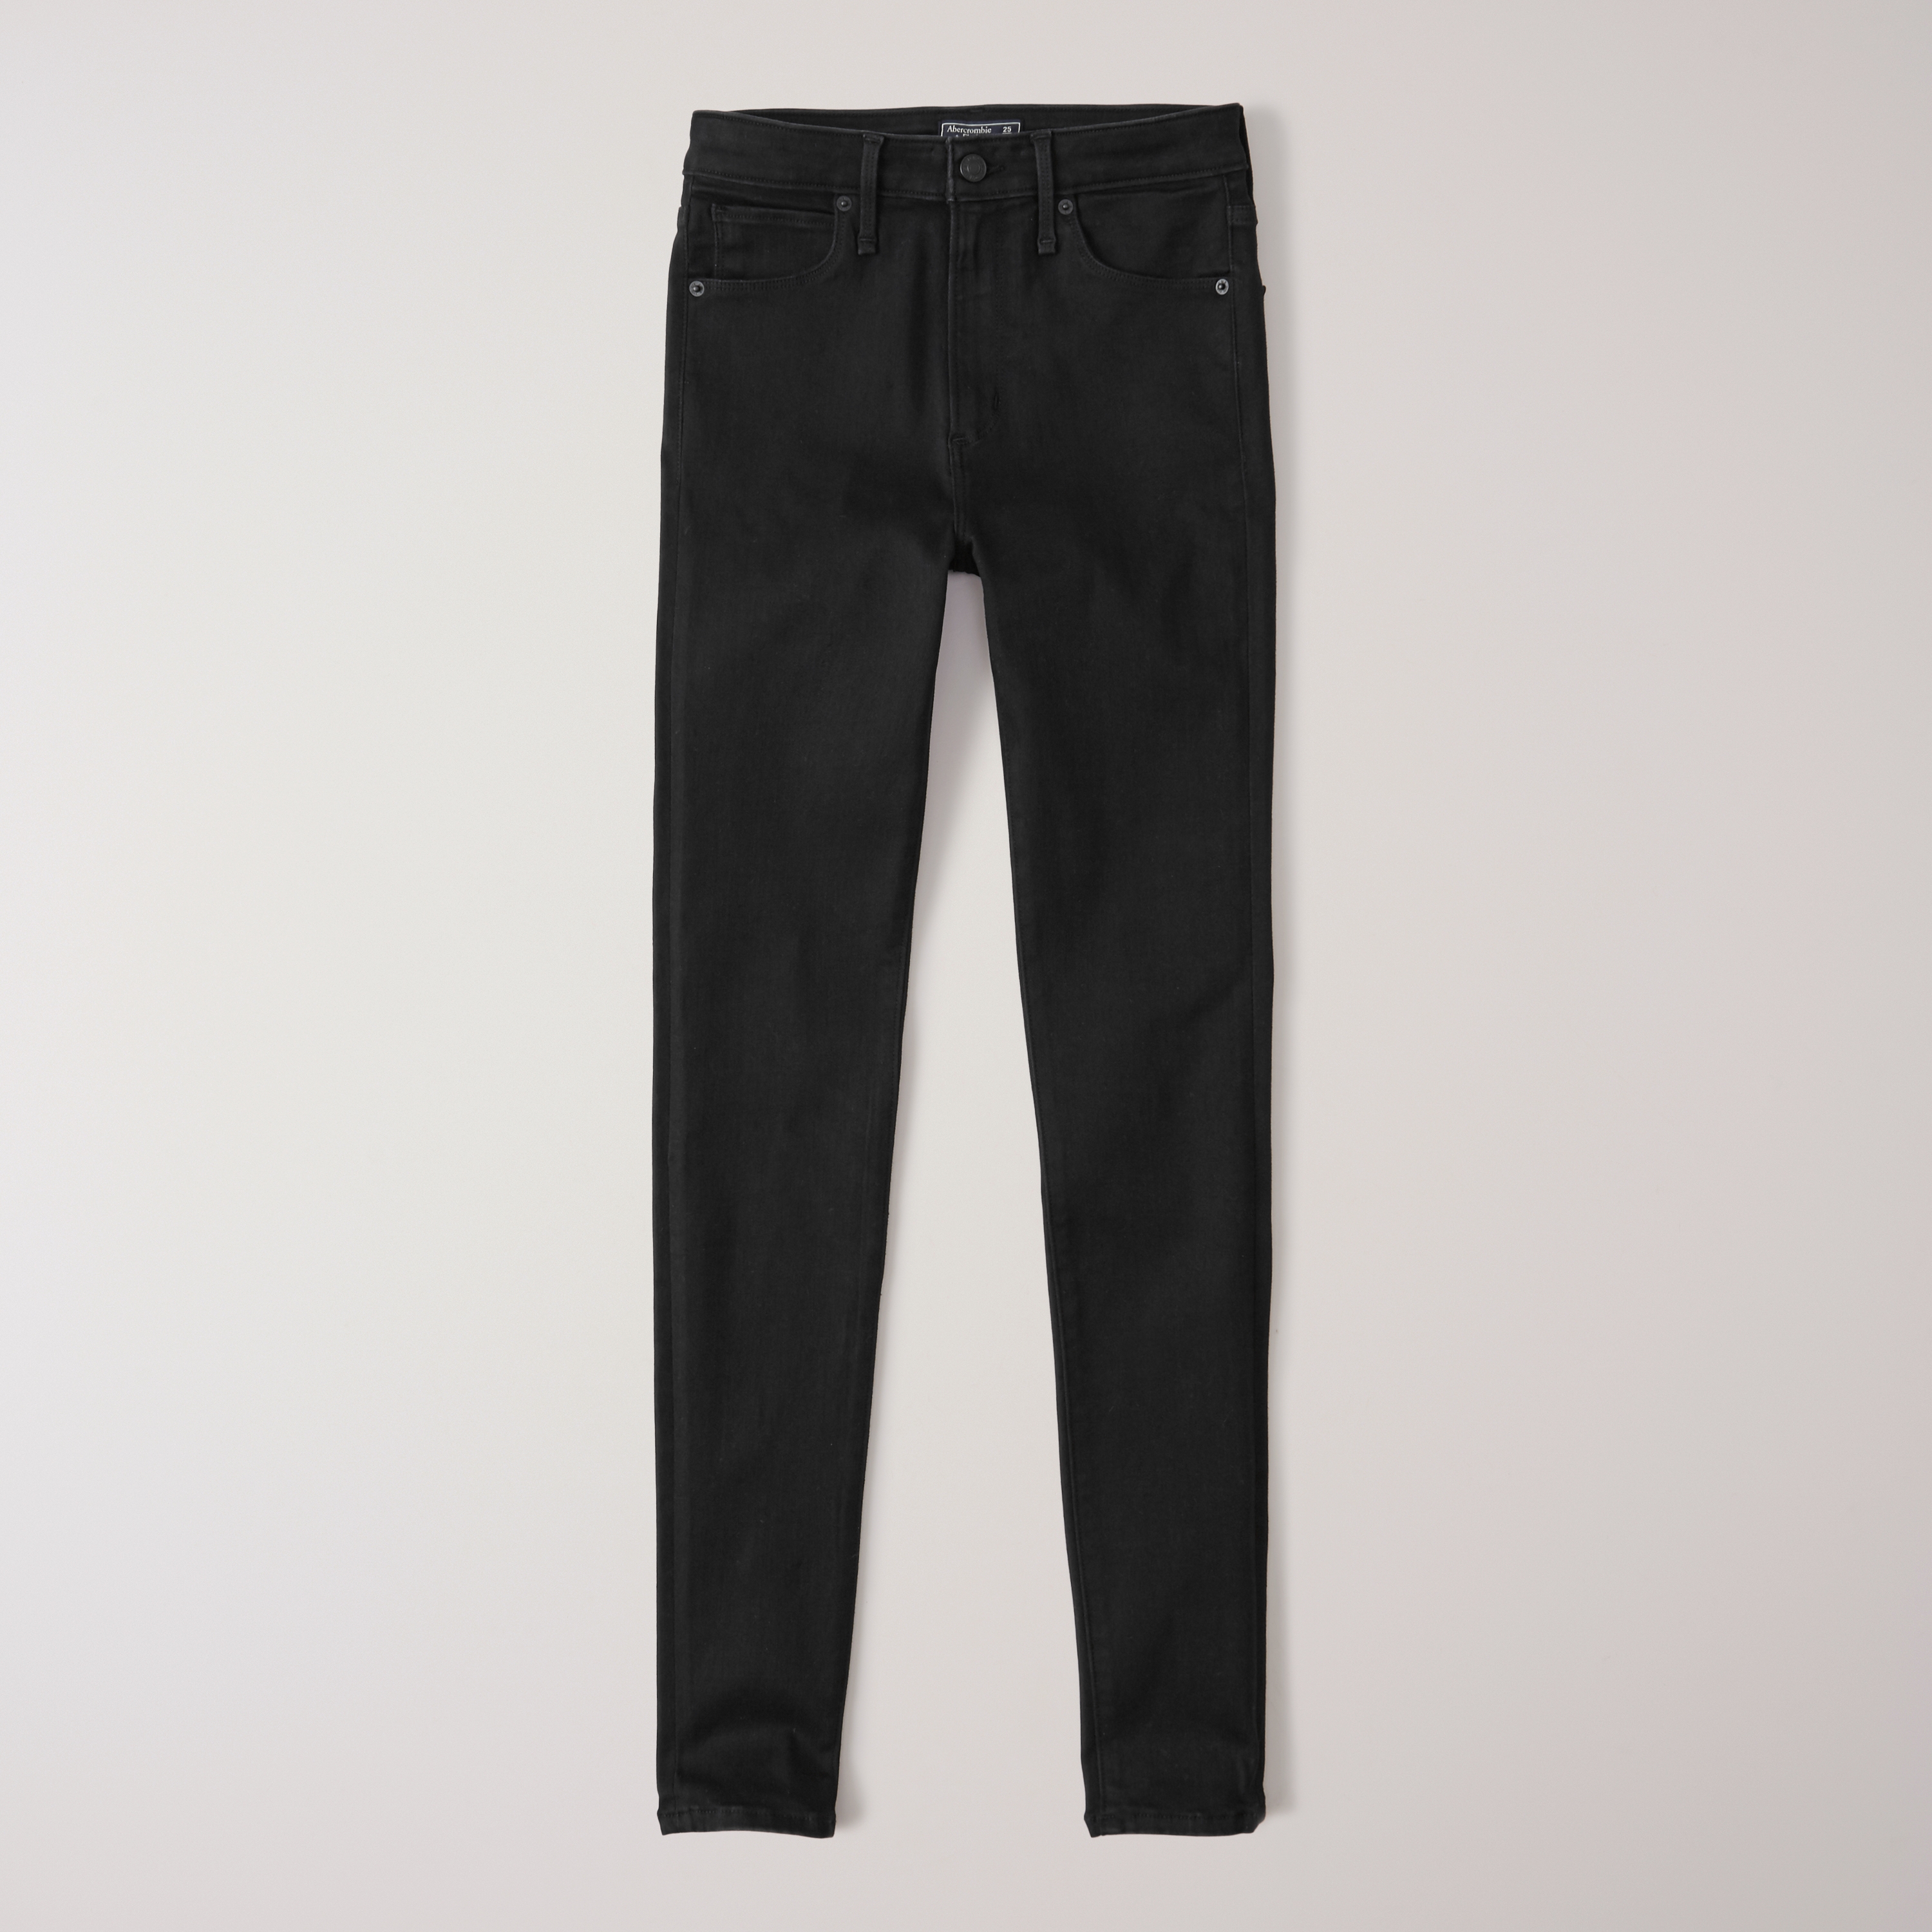 abercrombie black skinny jeans